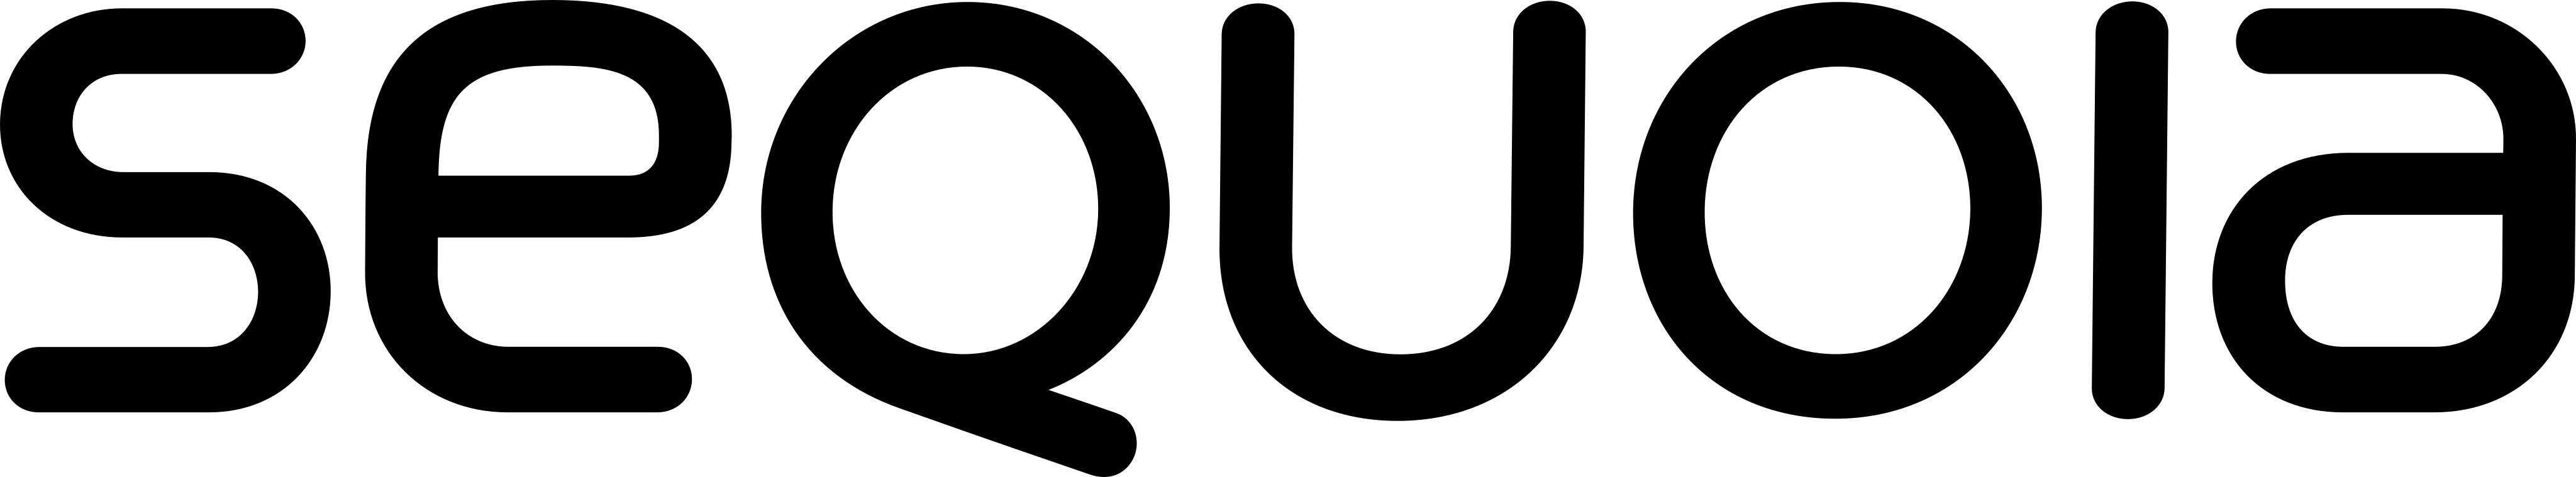 sequoia logo - Sequoia Logo